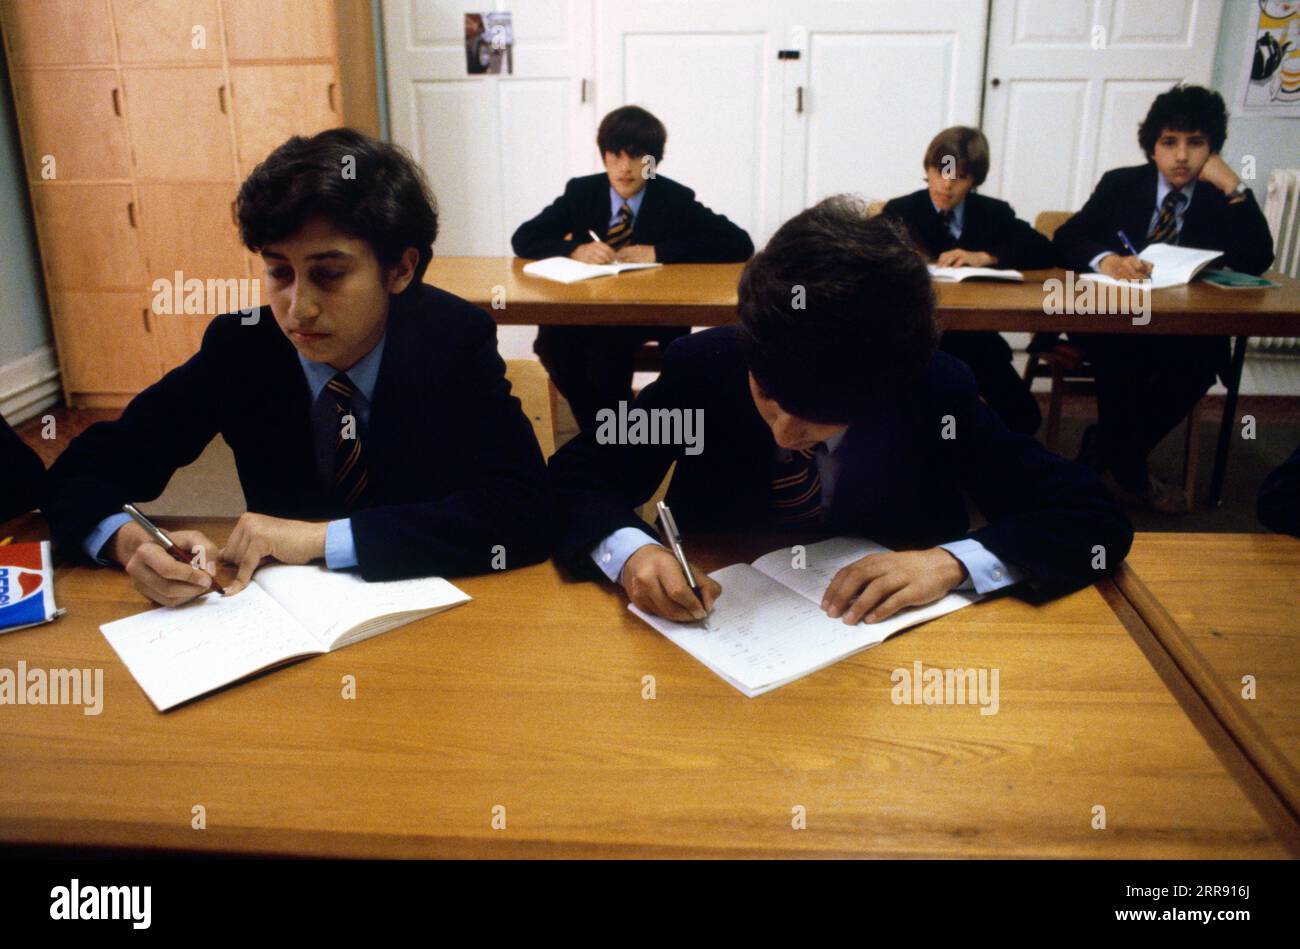 Avicenna College School Children in classroom Studying Islamic Avicenna Philosophy Stock Photo